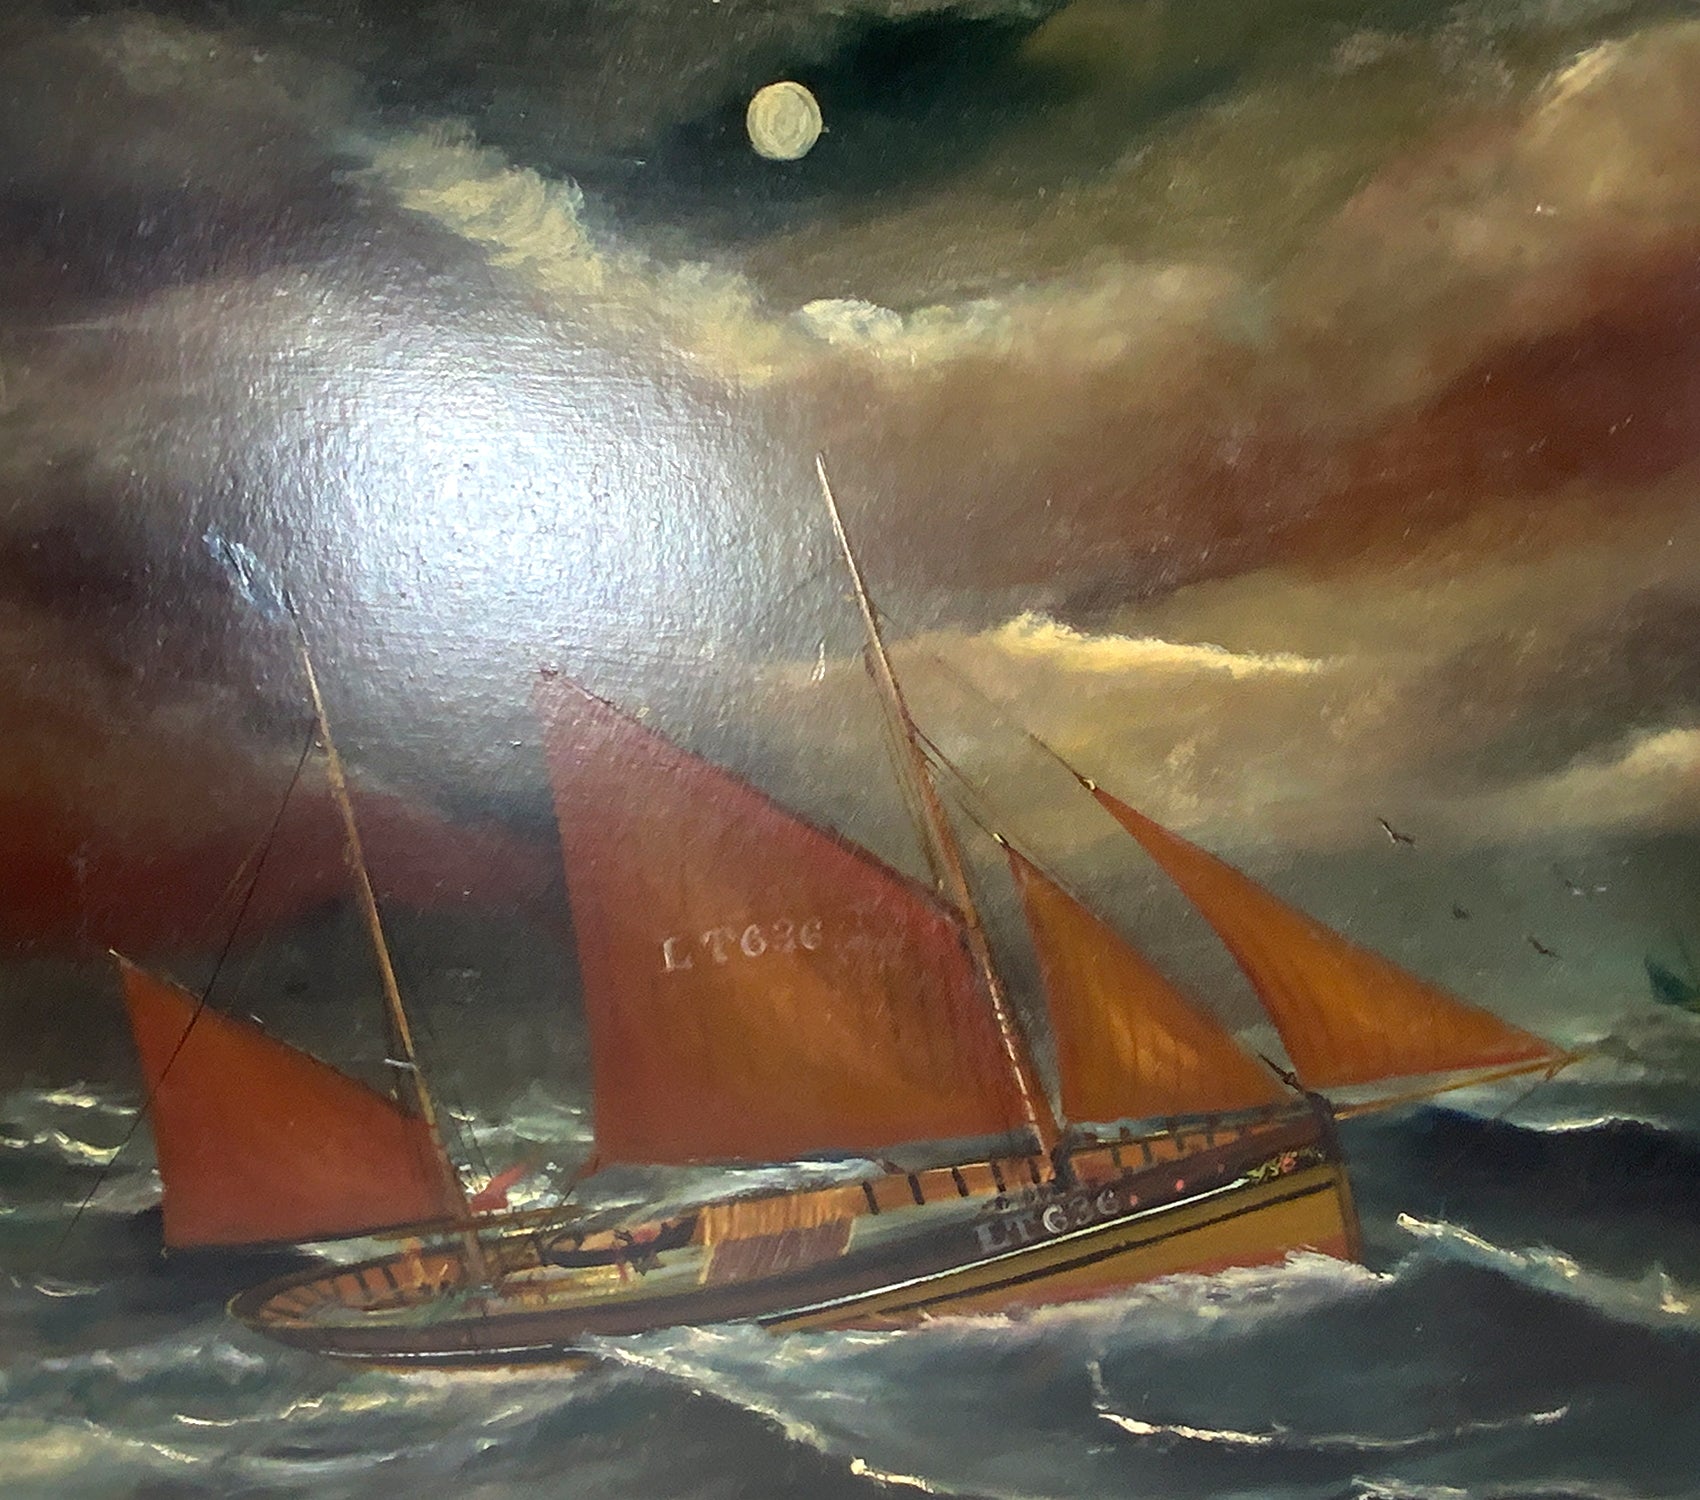 Painting Of An English Fishing Trawler - Lannan Gallery